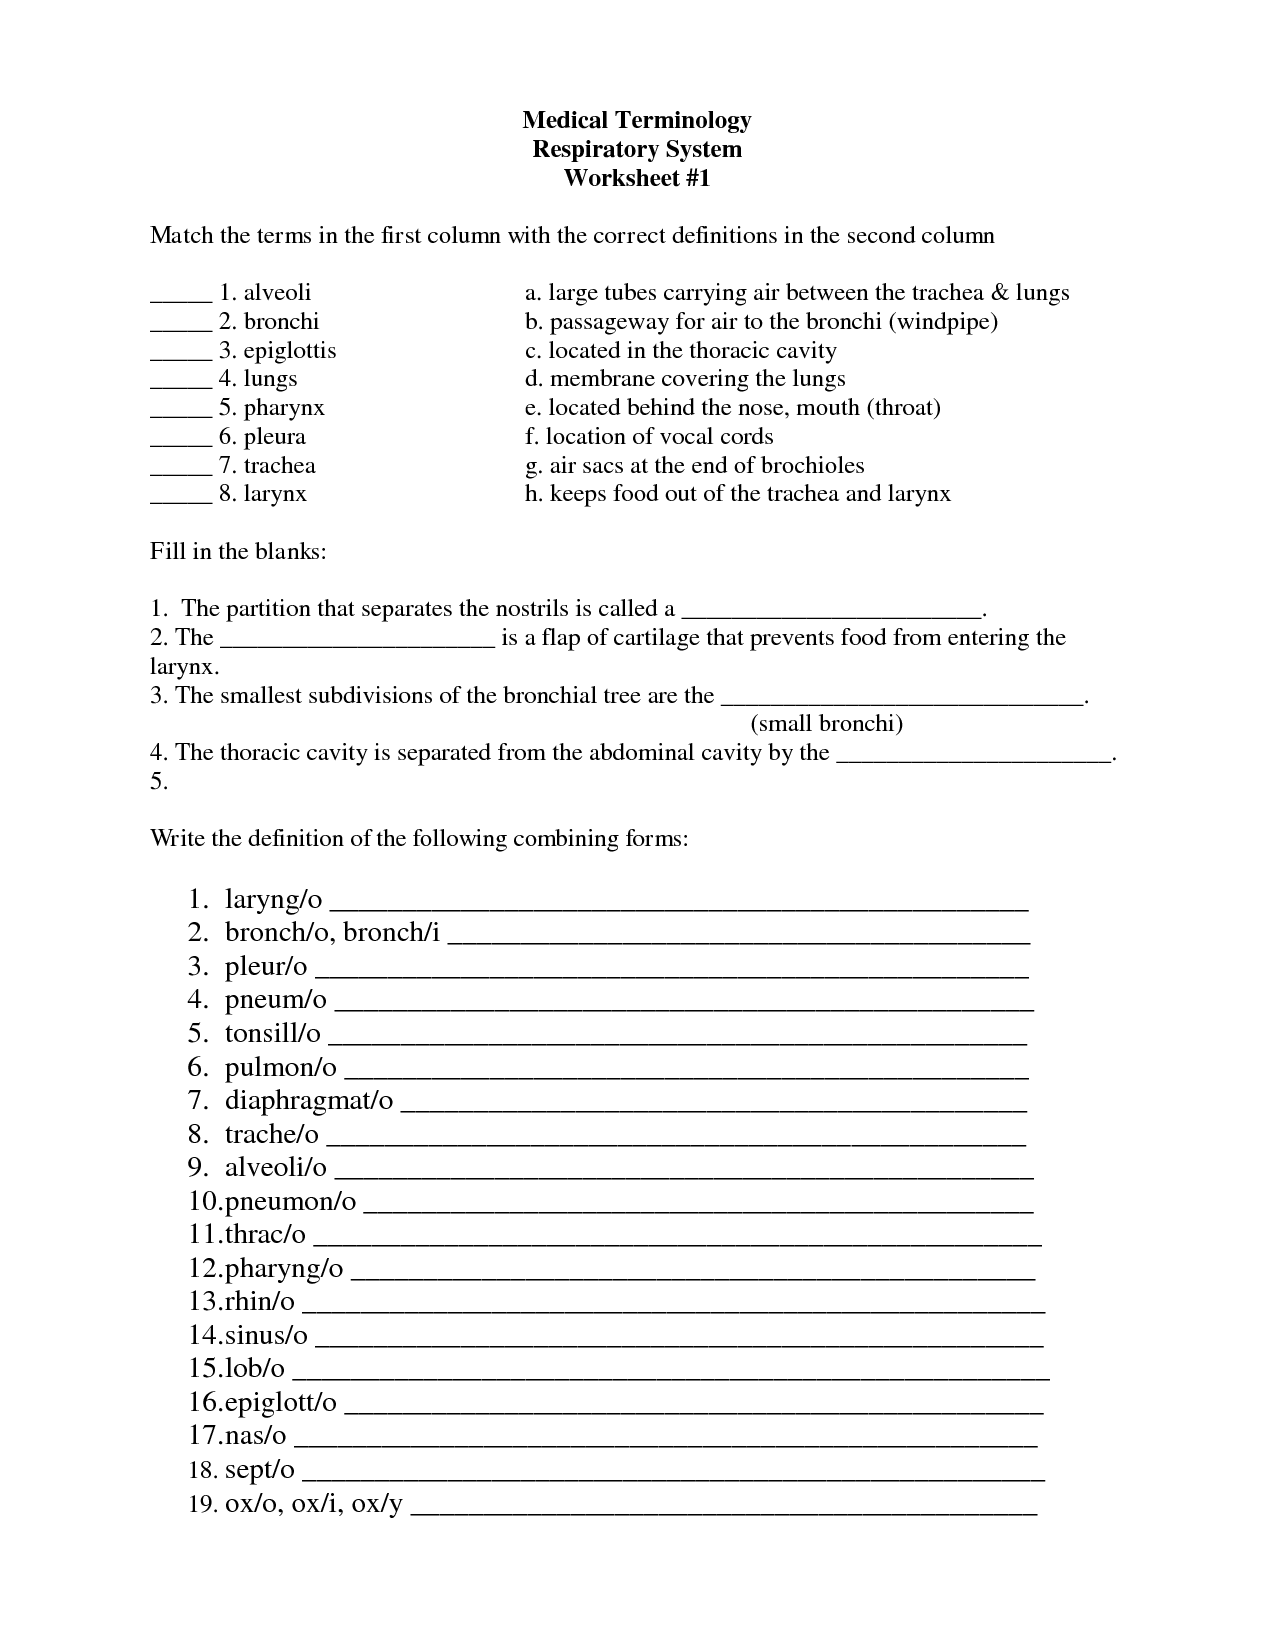 Applying Medical Terminology Worksheet